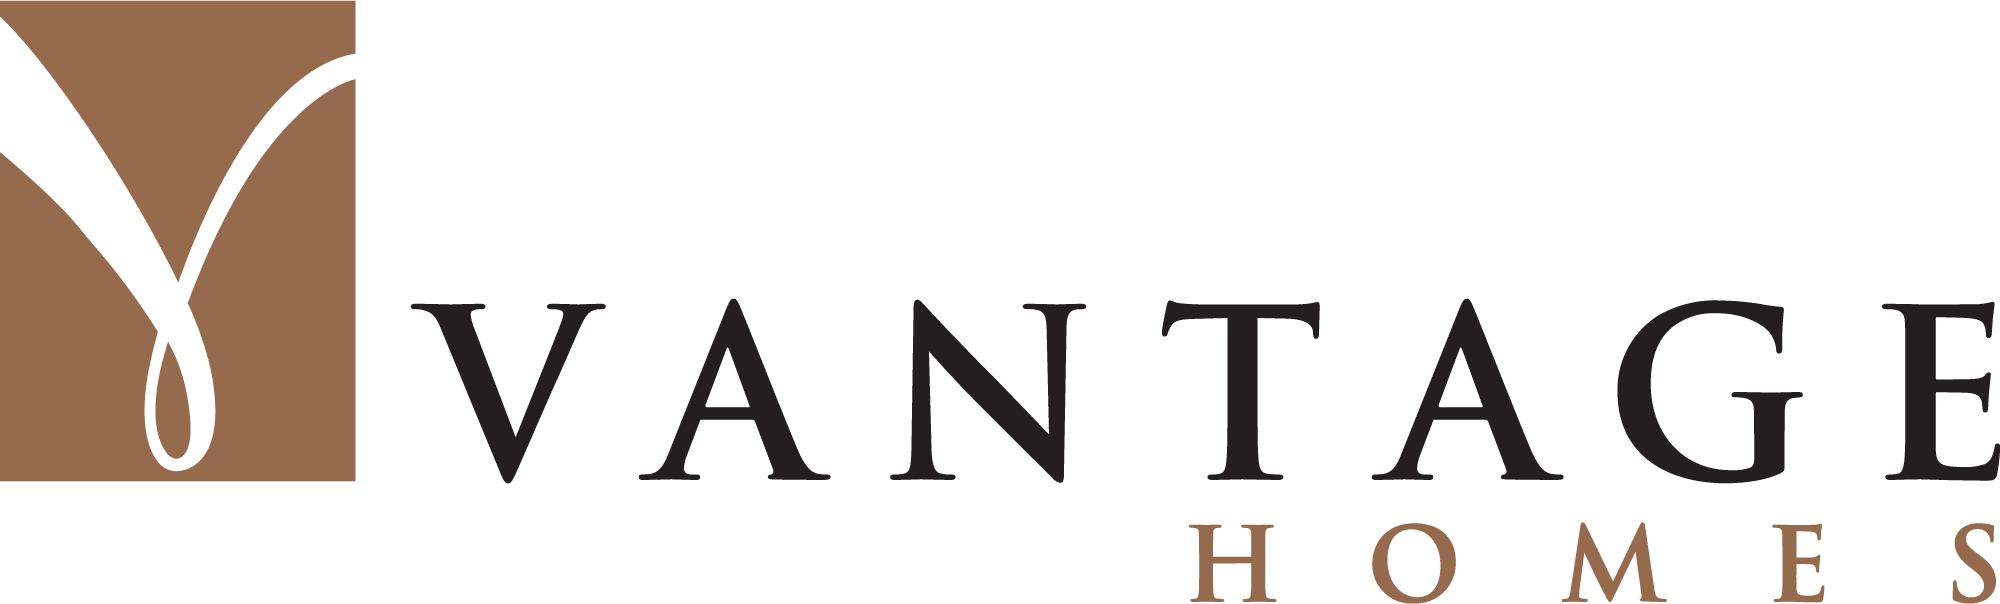 Vantage Homes logo